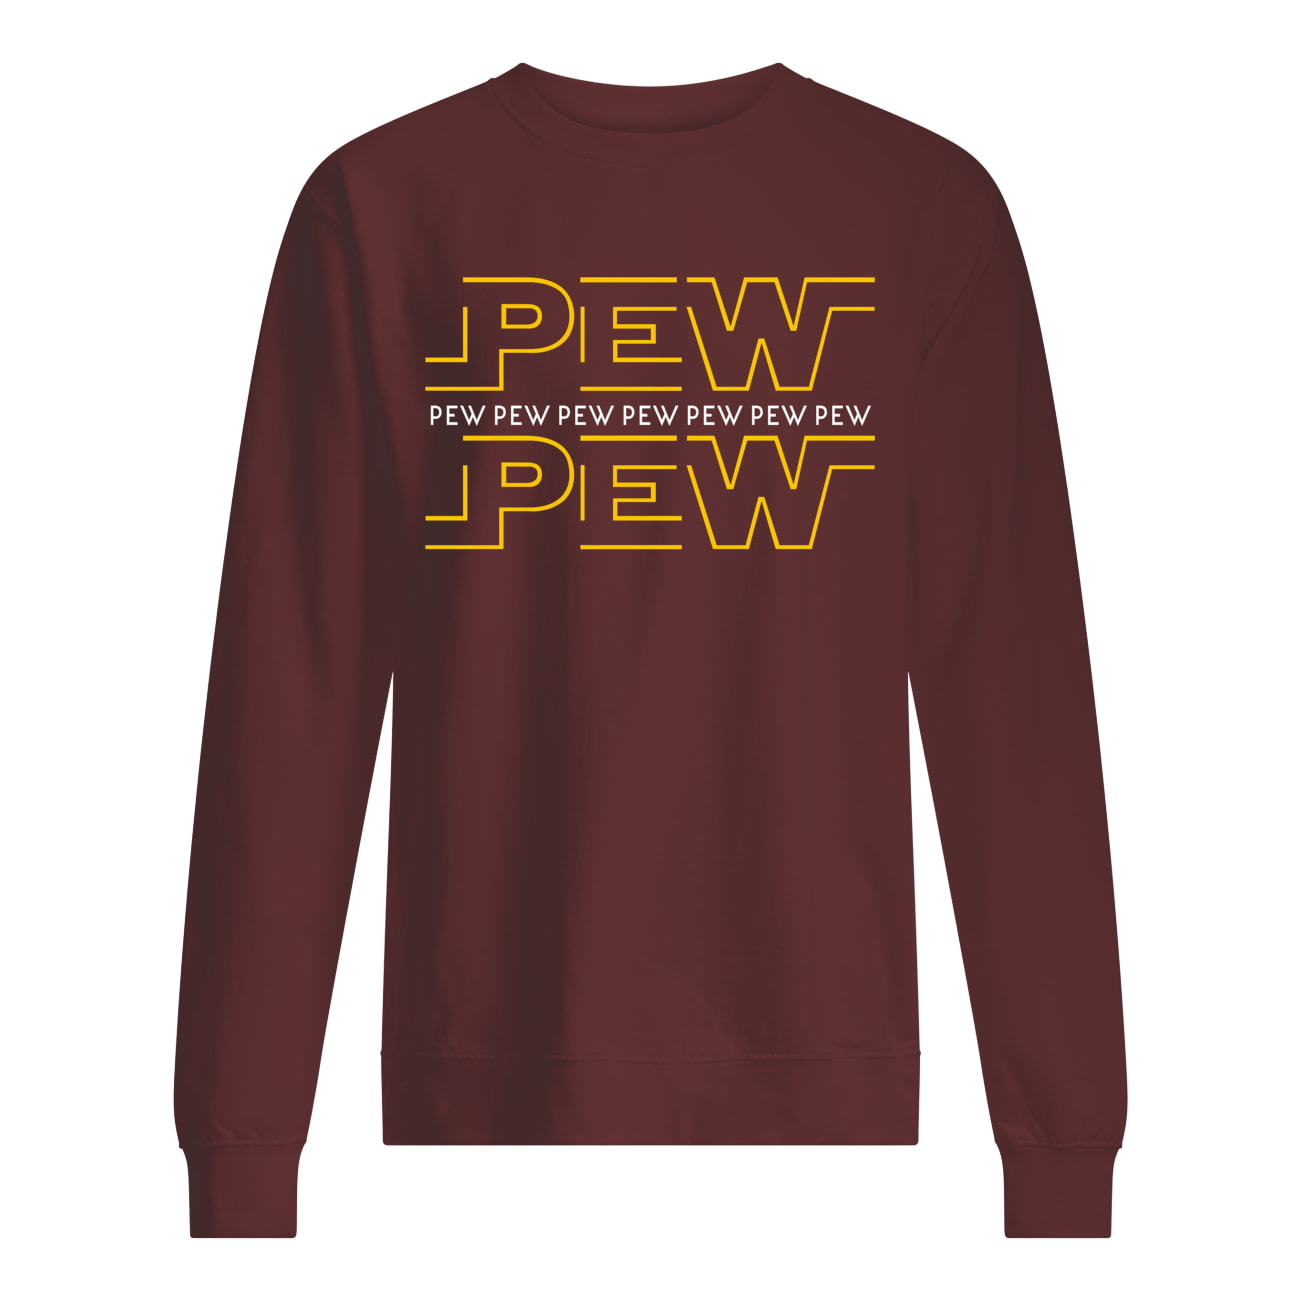 Pew pew pew star wars sweatshirt